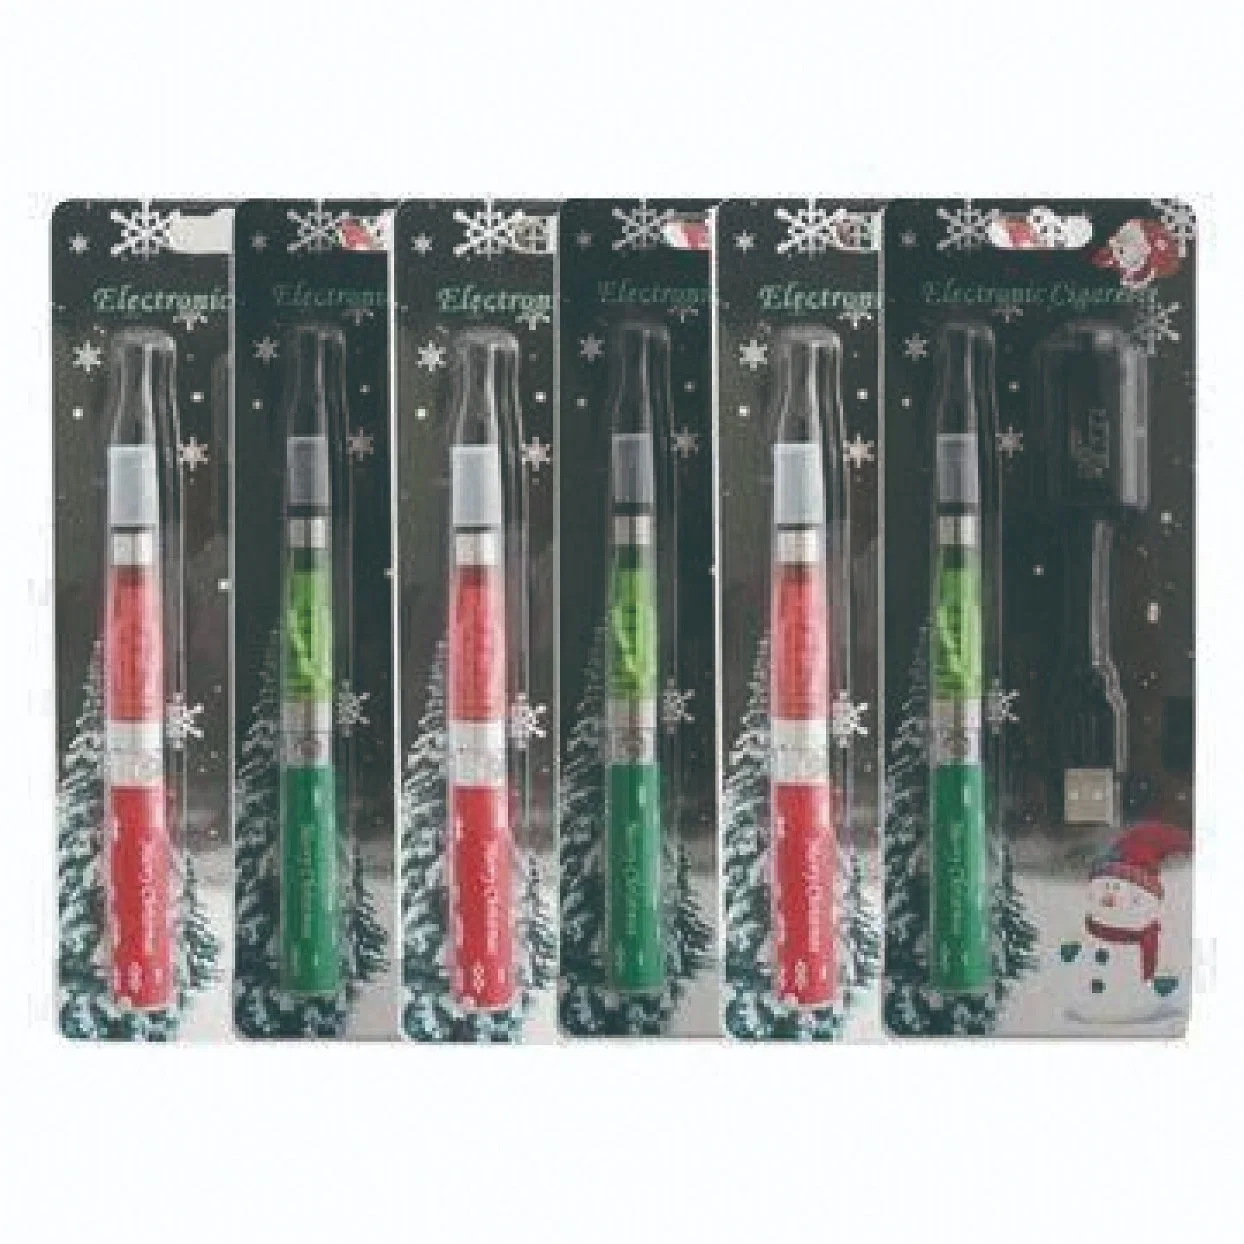 Nuevos Productos 2014 E-Cigarette Color, Vaporizantes Mayoristas CE4 EGO Starter Kits